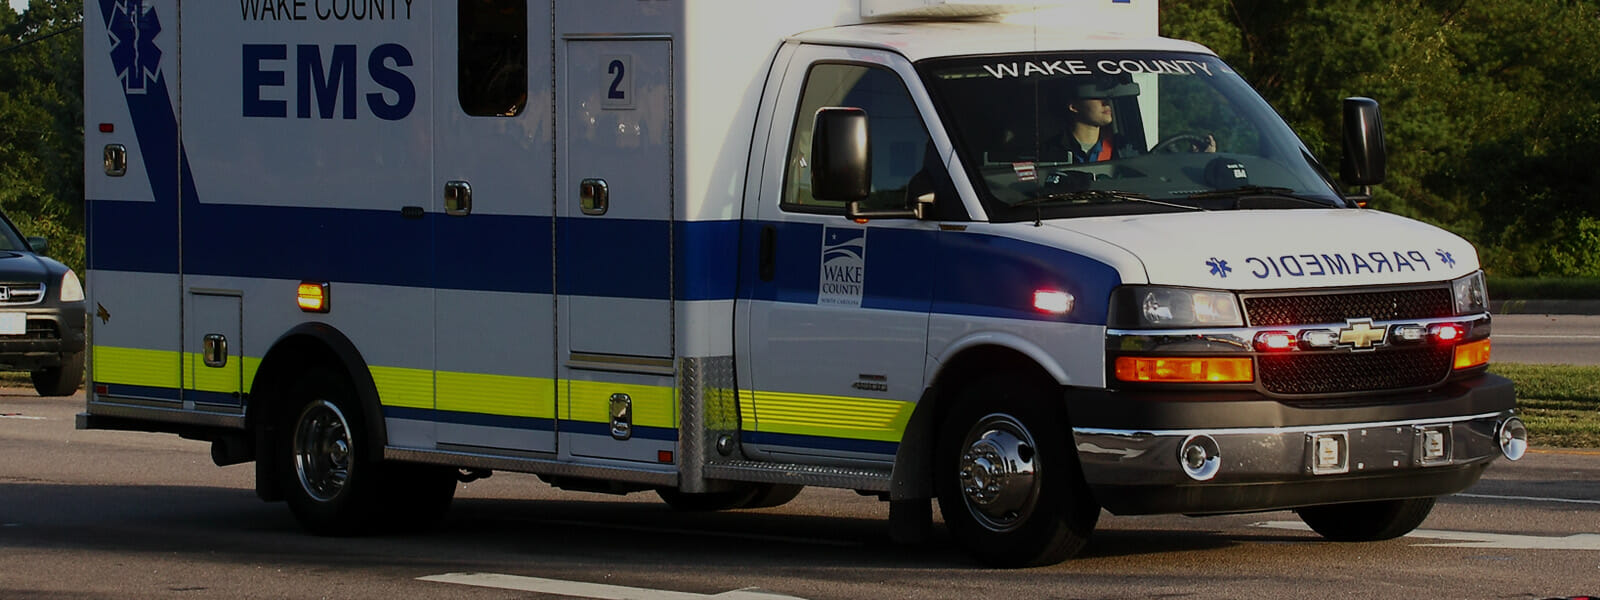 emergency response vehicle, first responders, responder safety